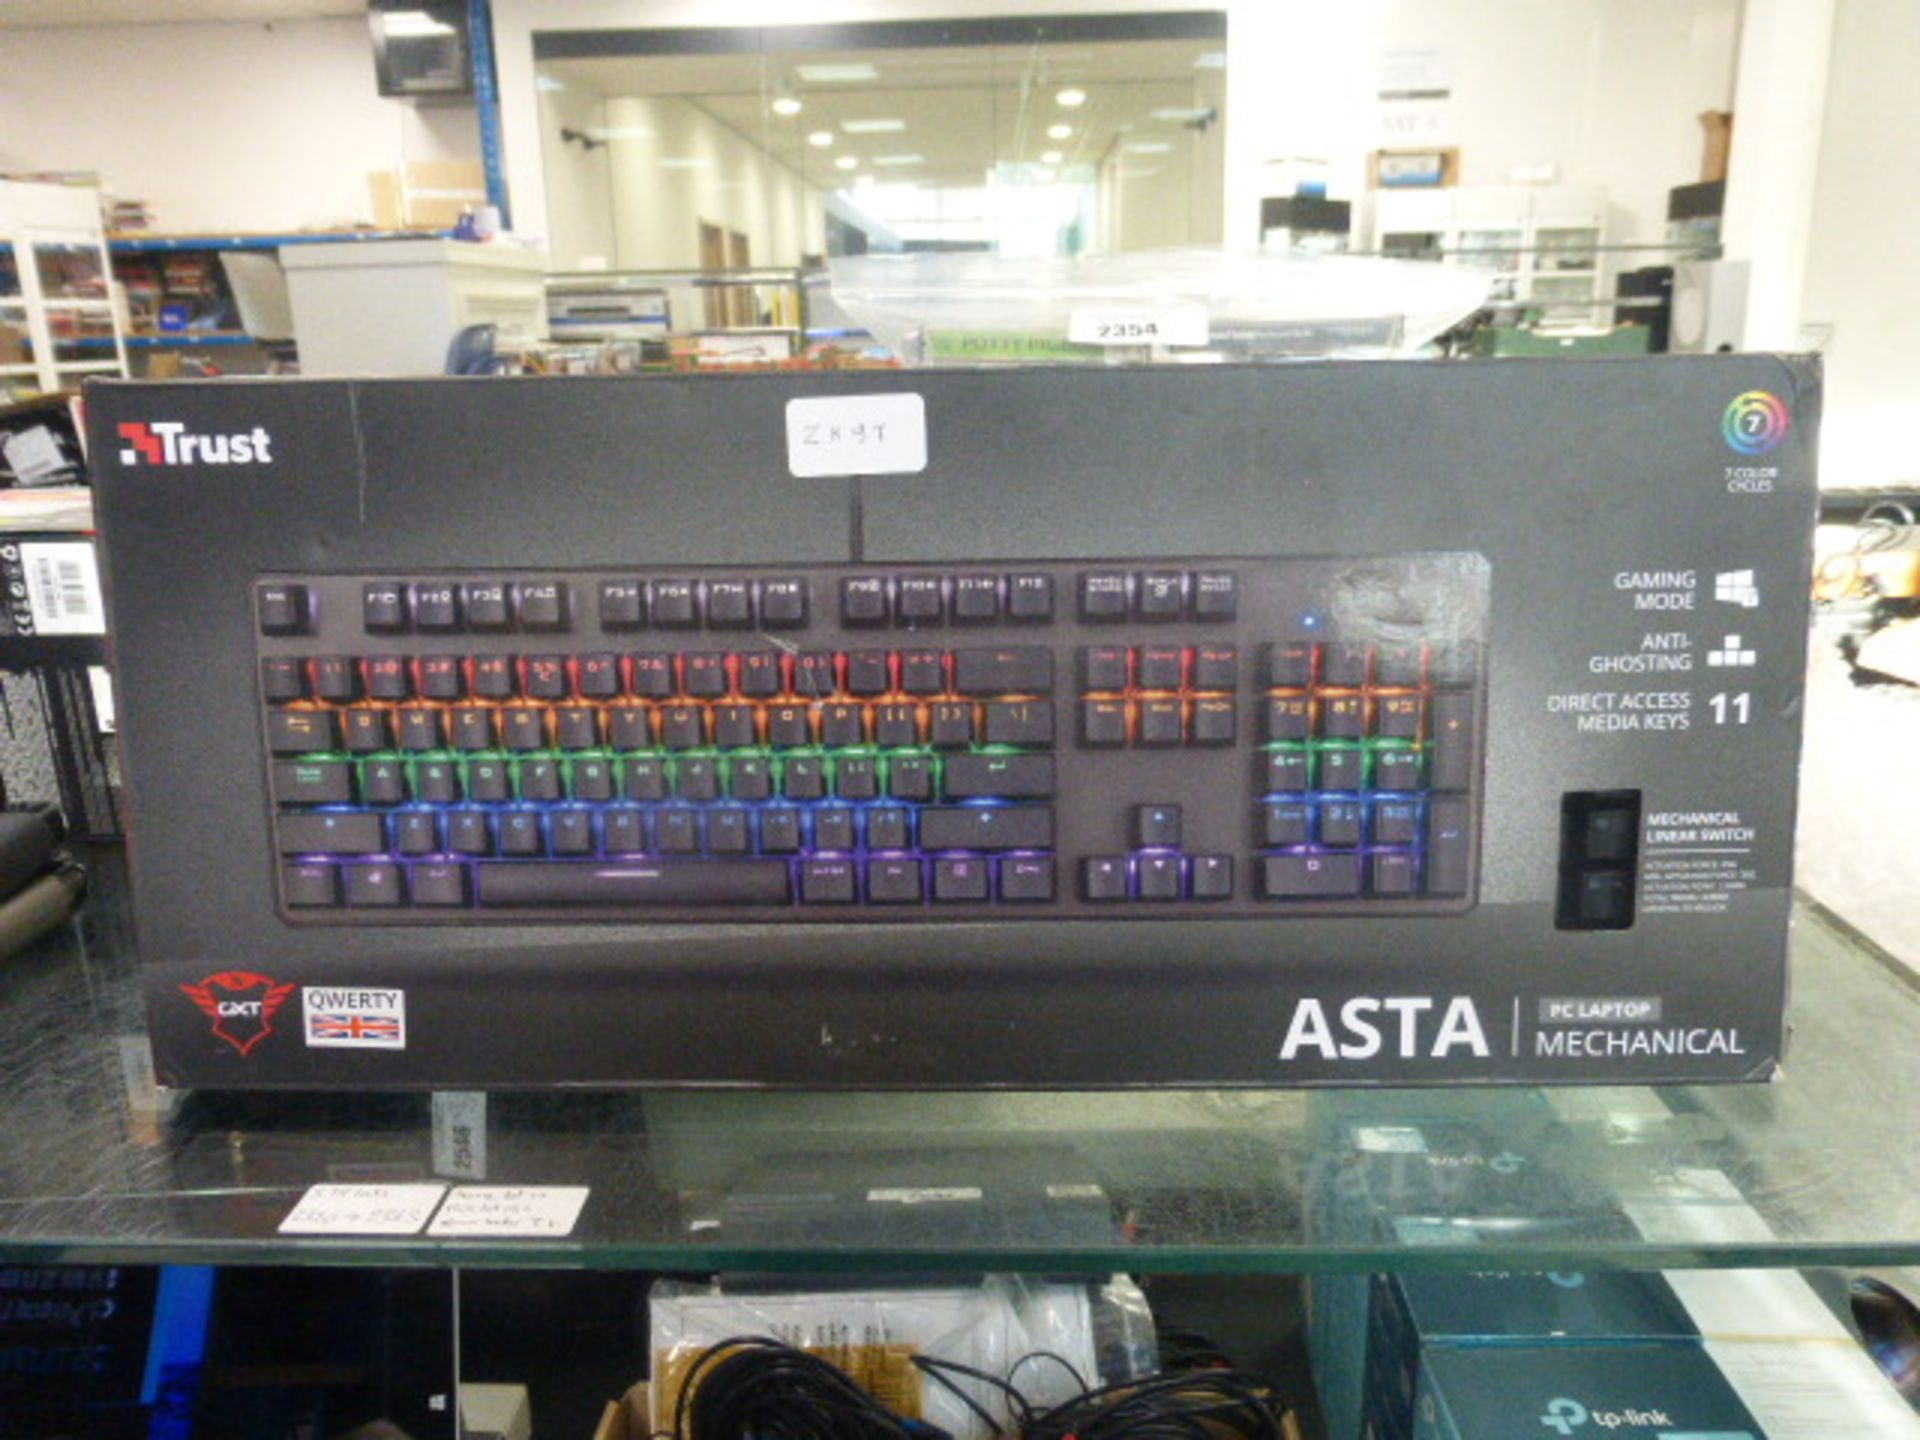 Trust Asca mechanical keyboard in box